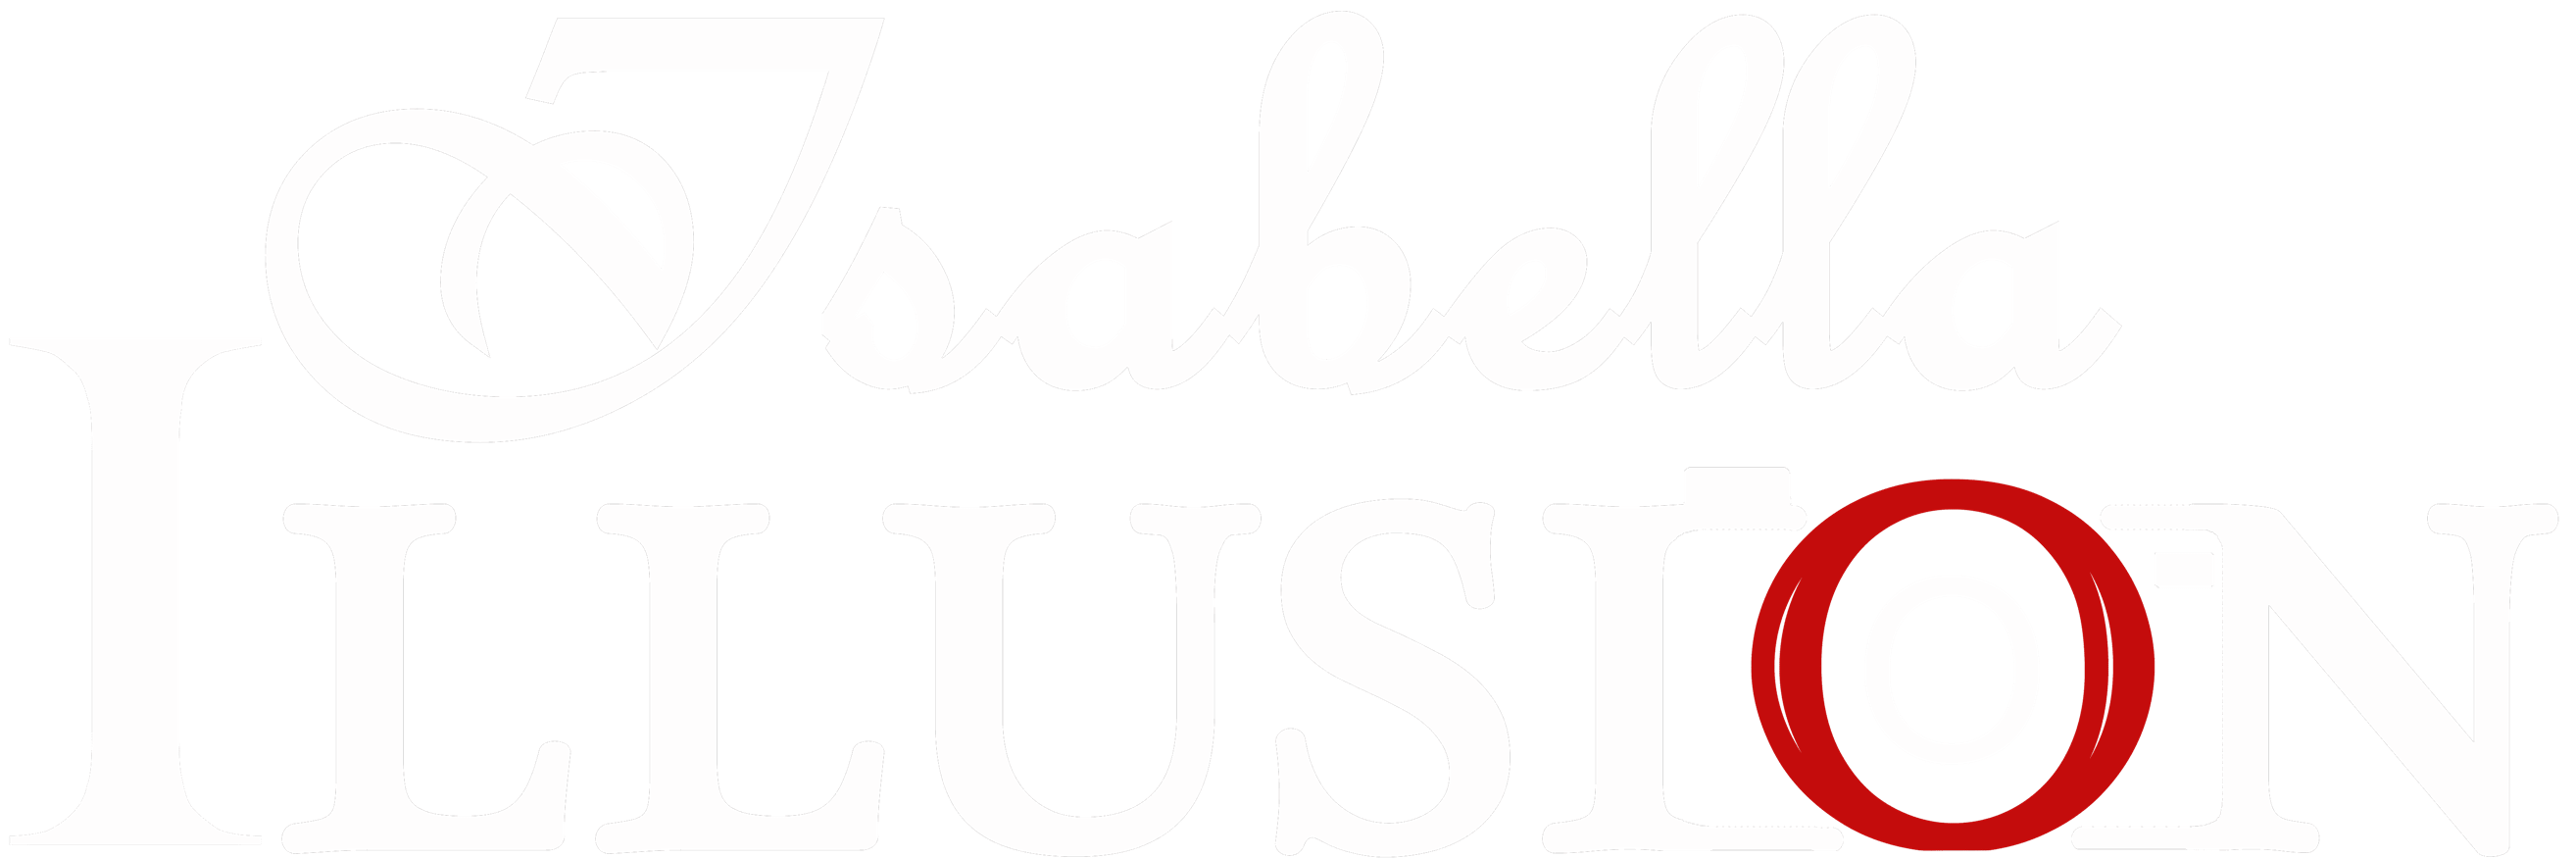 isabella illusion logo white